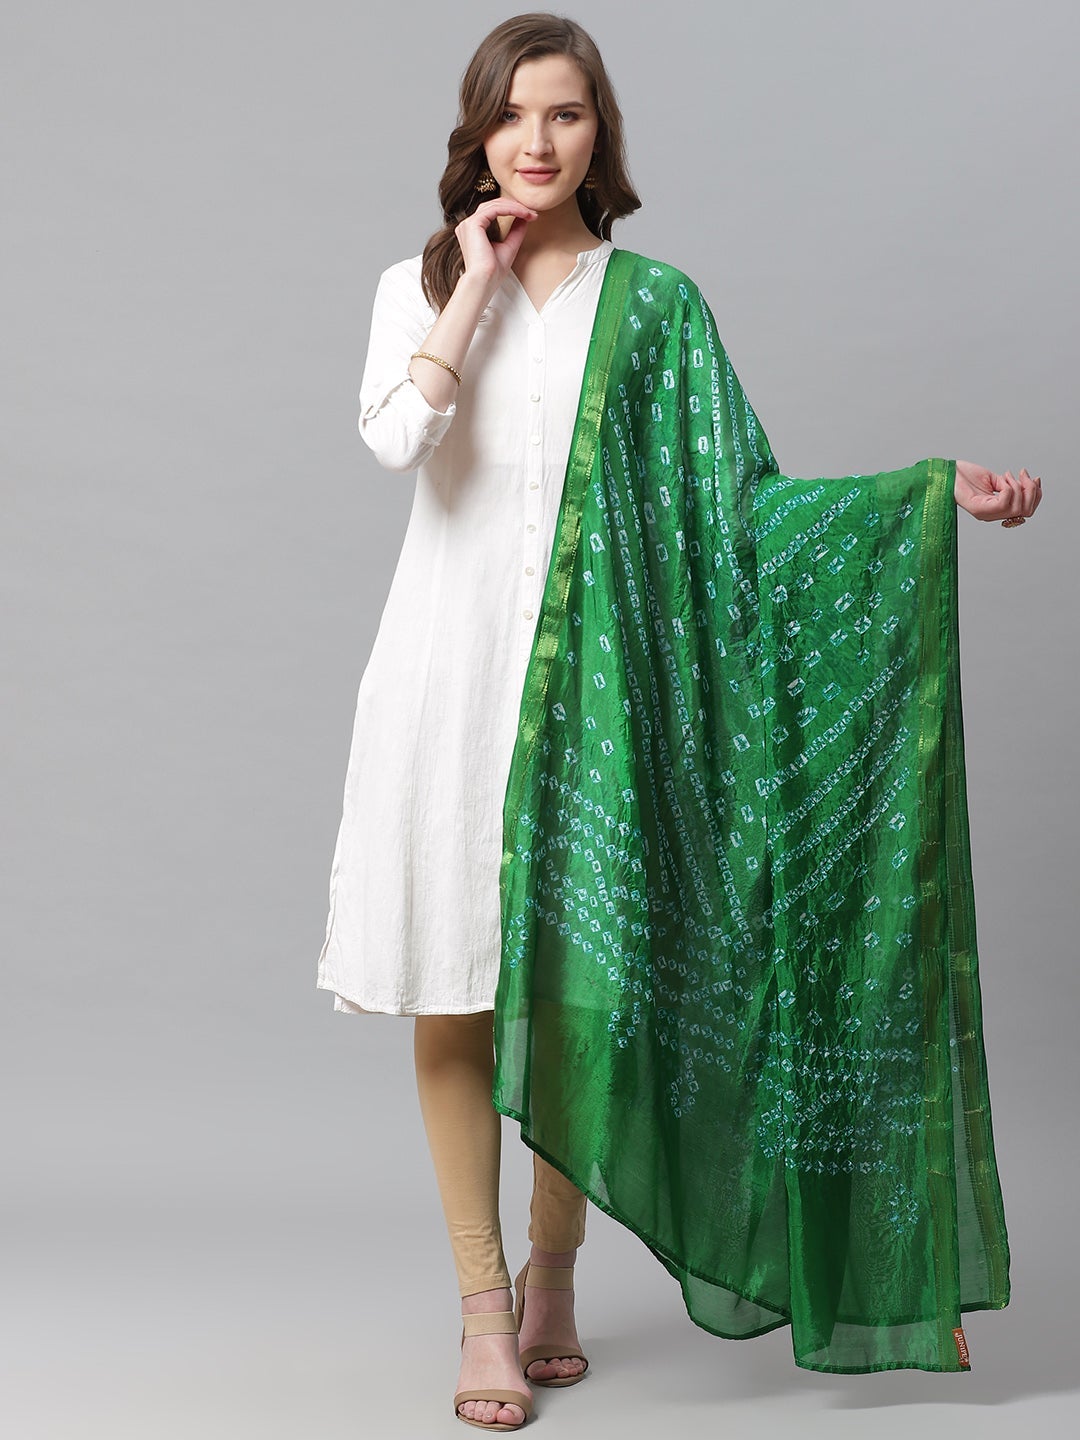 Juniper Green Bandhani Tie-Dye Shantoon Dupatta For Women